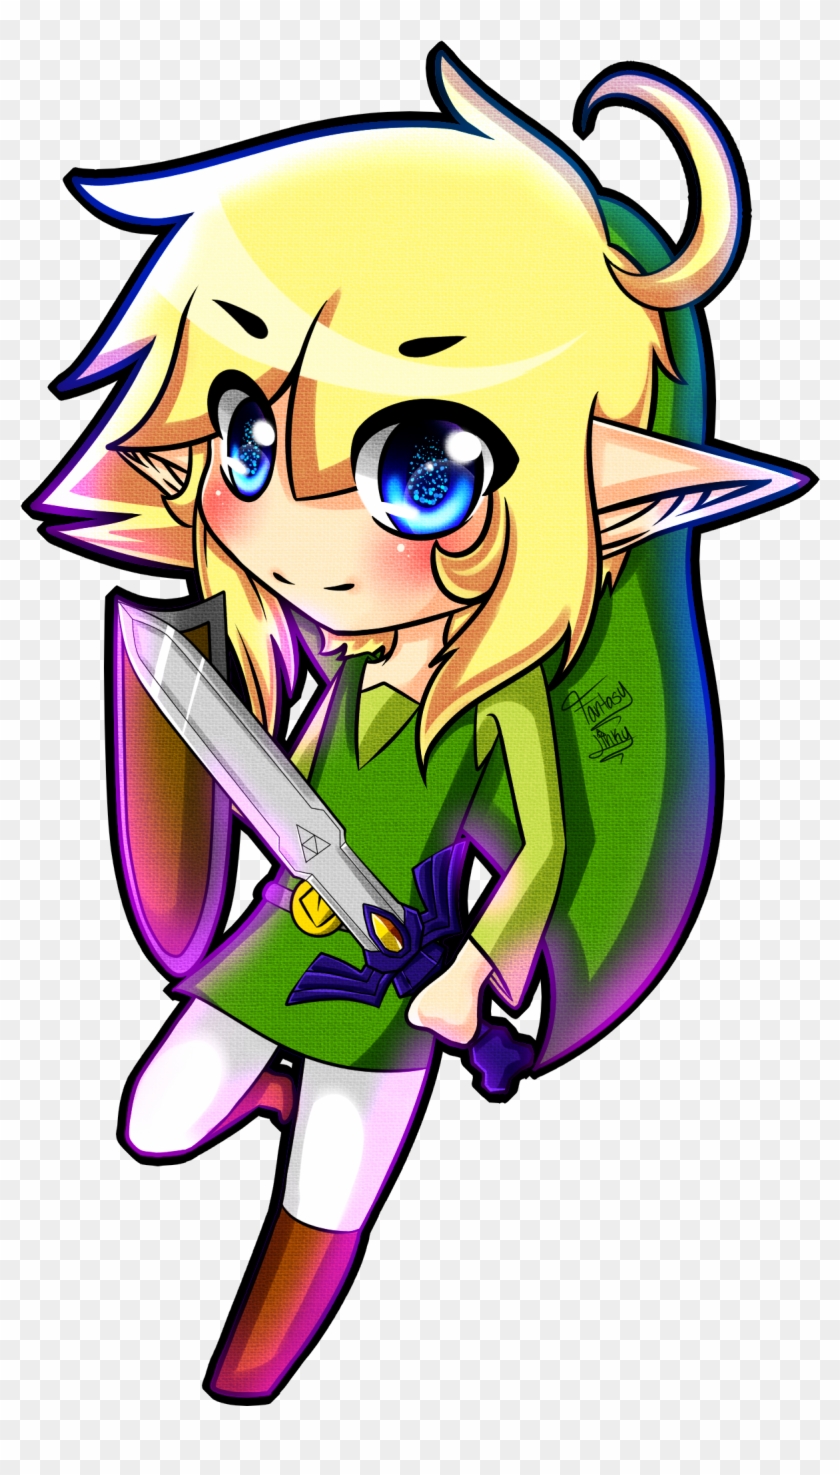 Toon Link, The Legend Of Zelda Artwork By Fantasy Linky - Cartoon, HD